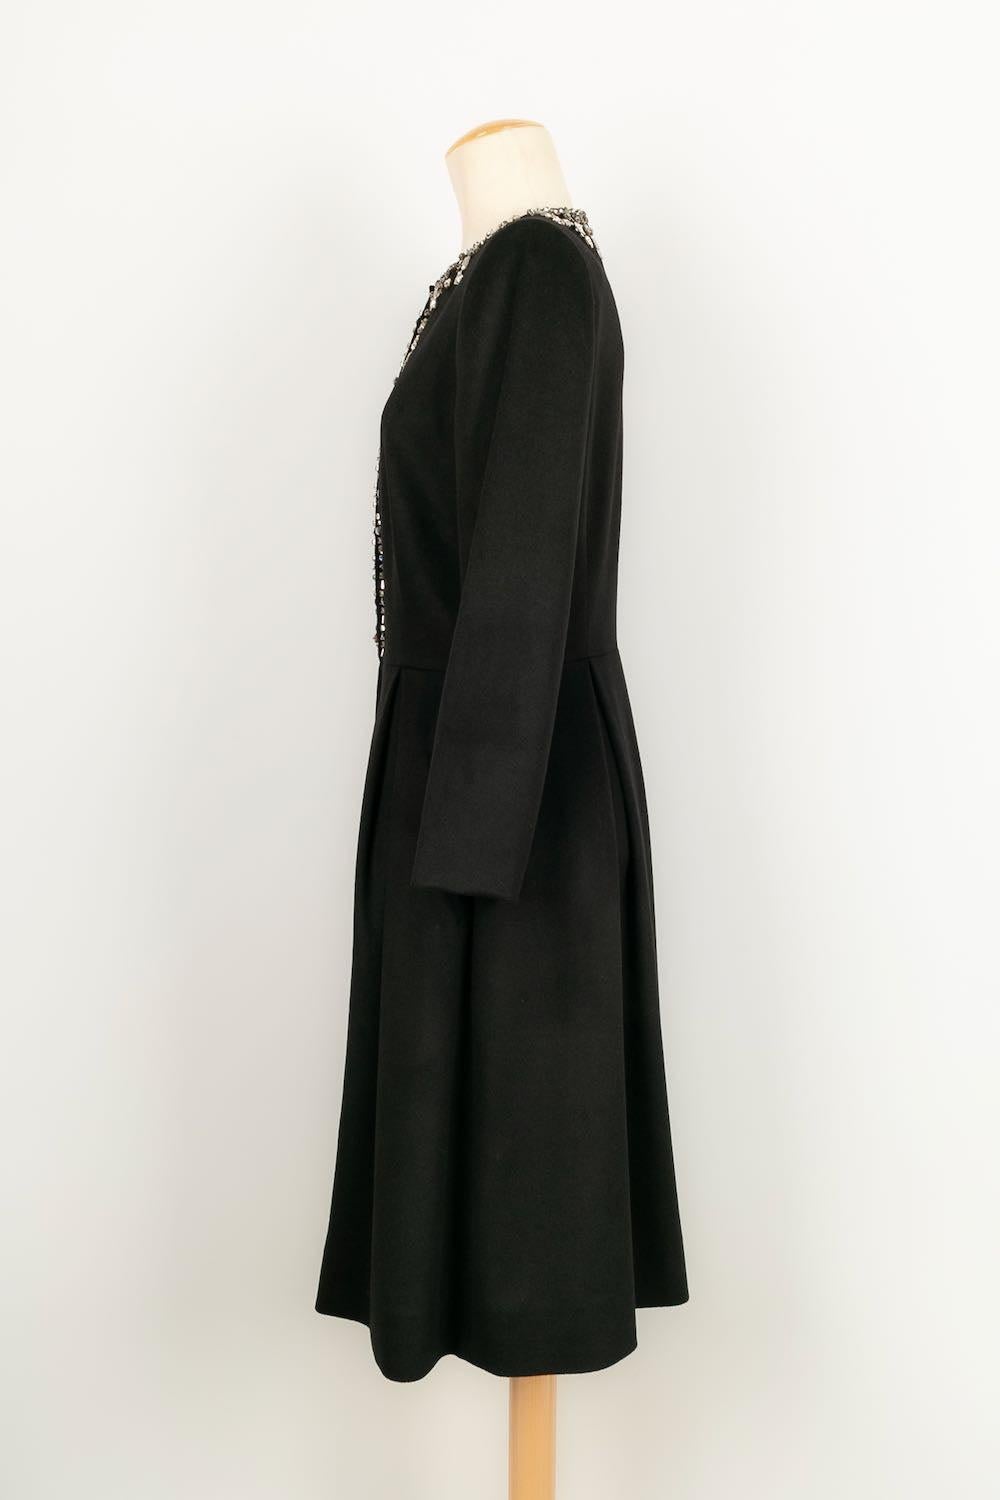 Azzaro Long Black Cashmere Jacket, Size 40FR For Sale 1